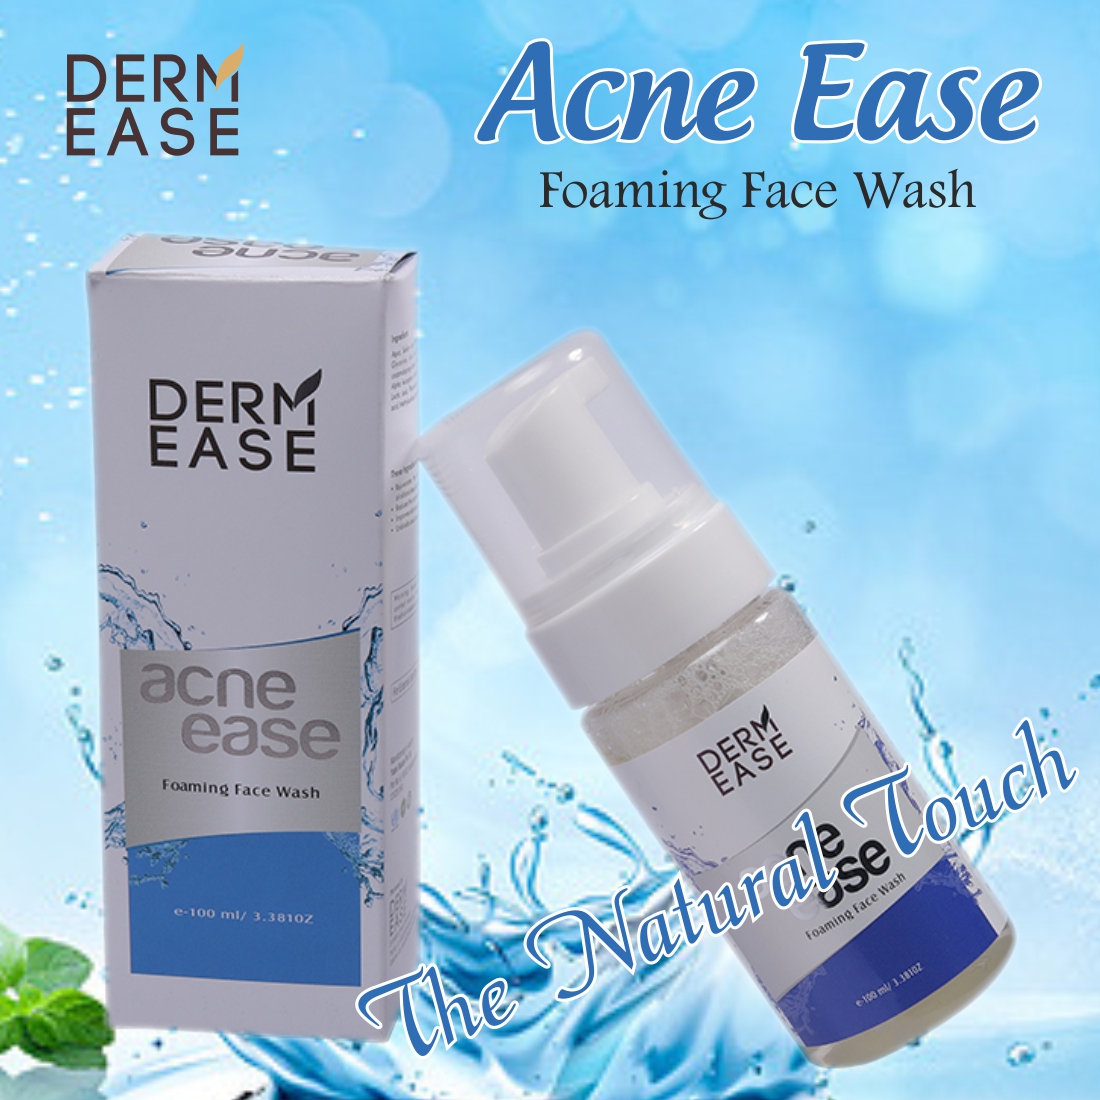 DERM EASE Acne Ease Foaming Face Wash Combo